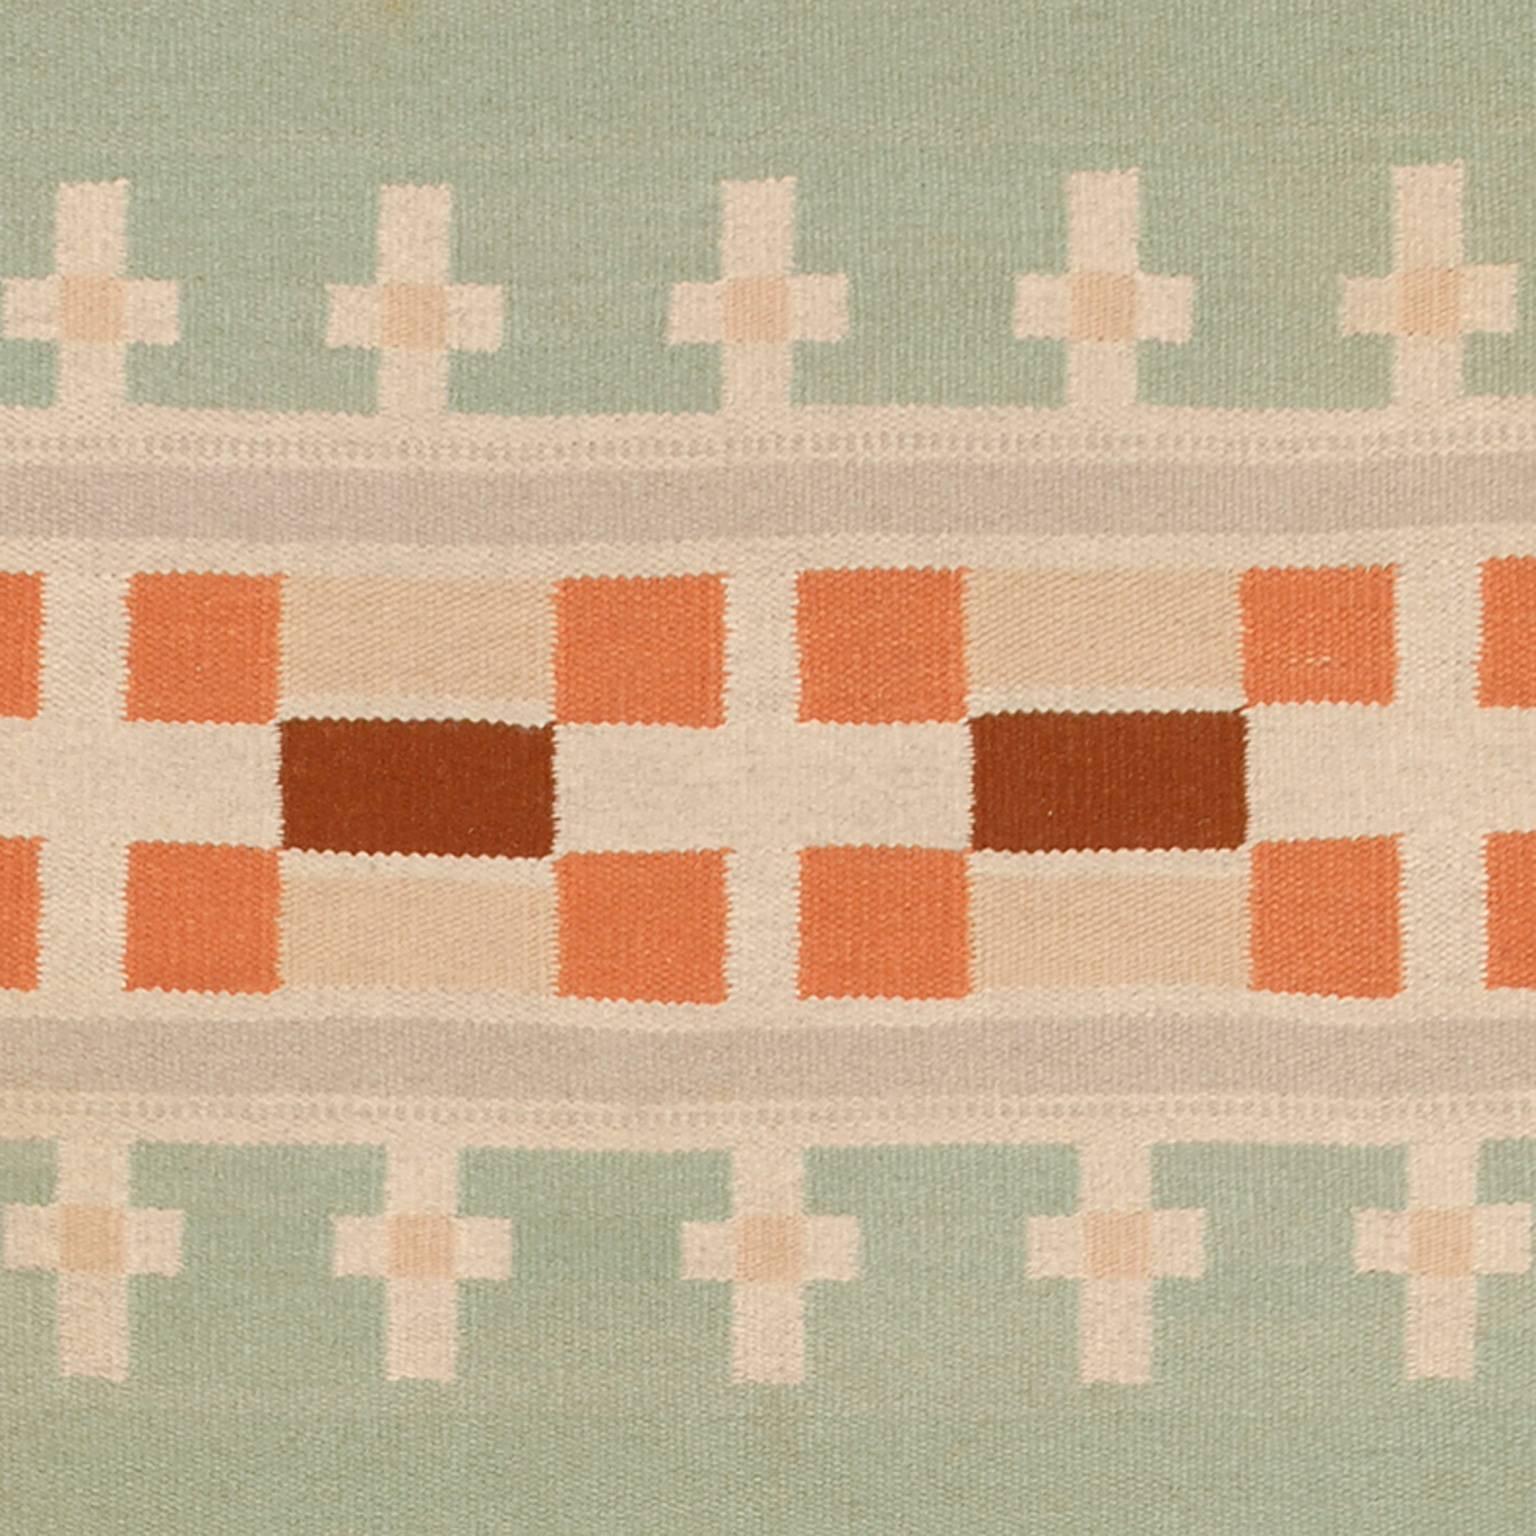 Mid-20th Century Swedish Flat-Weave Carpet For Sale 1